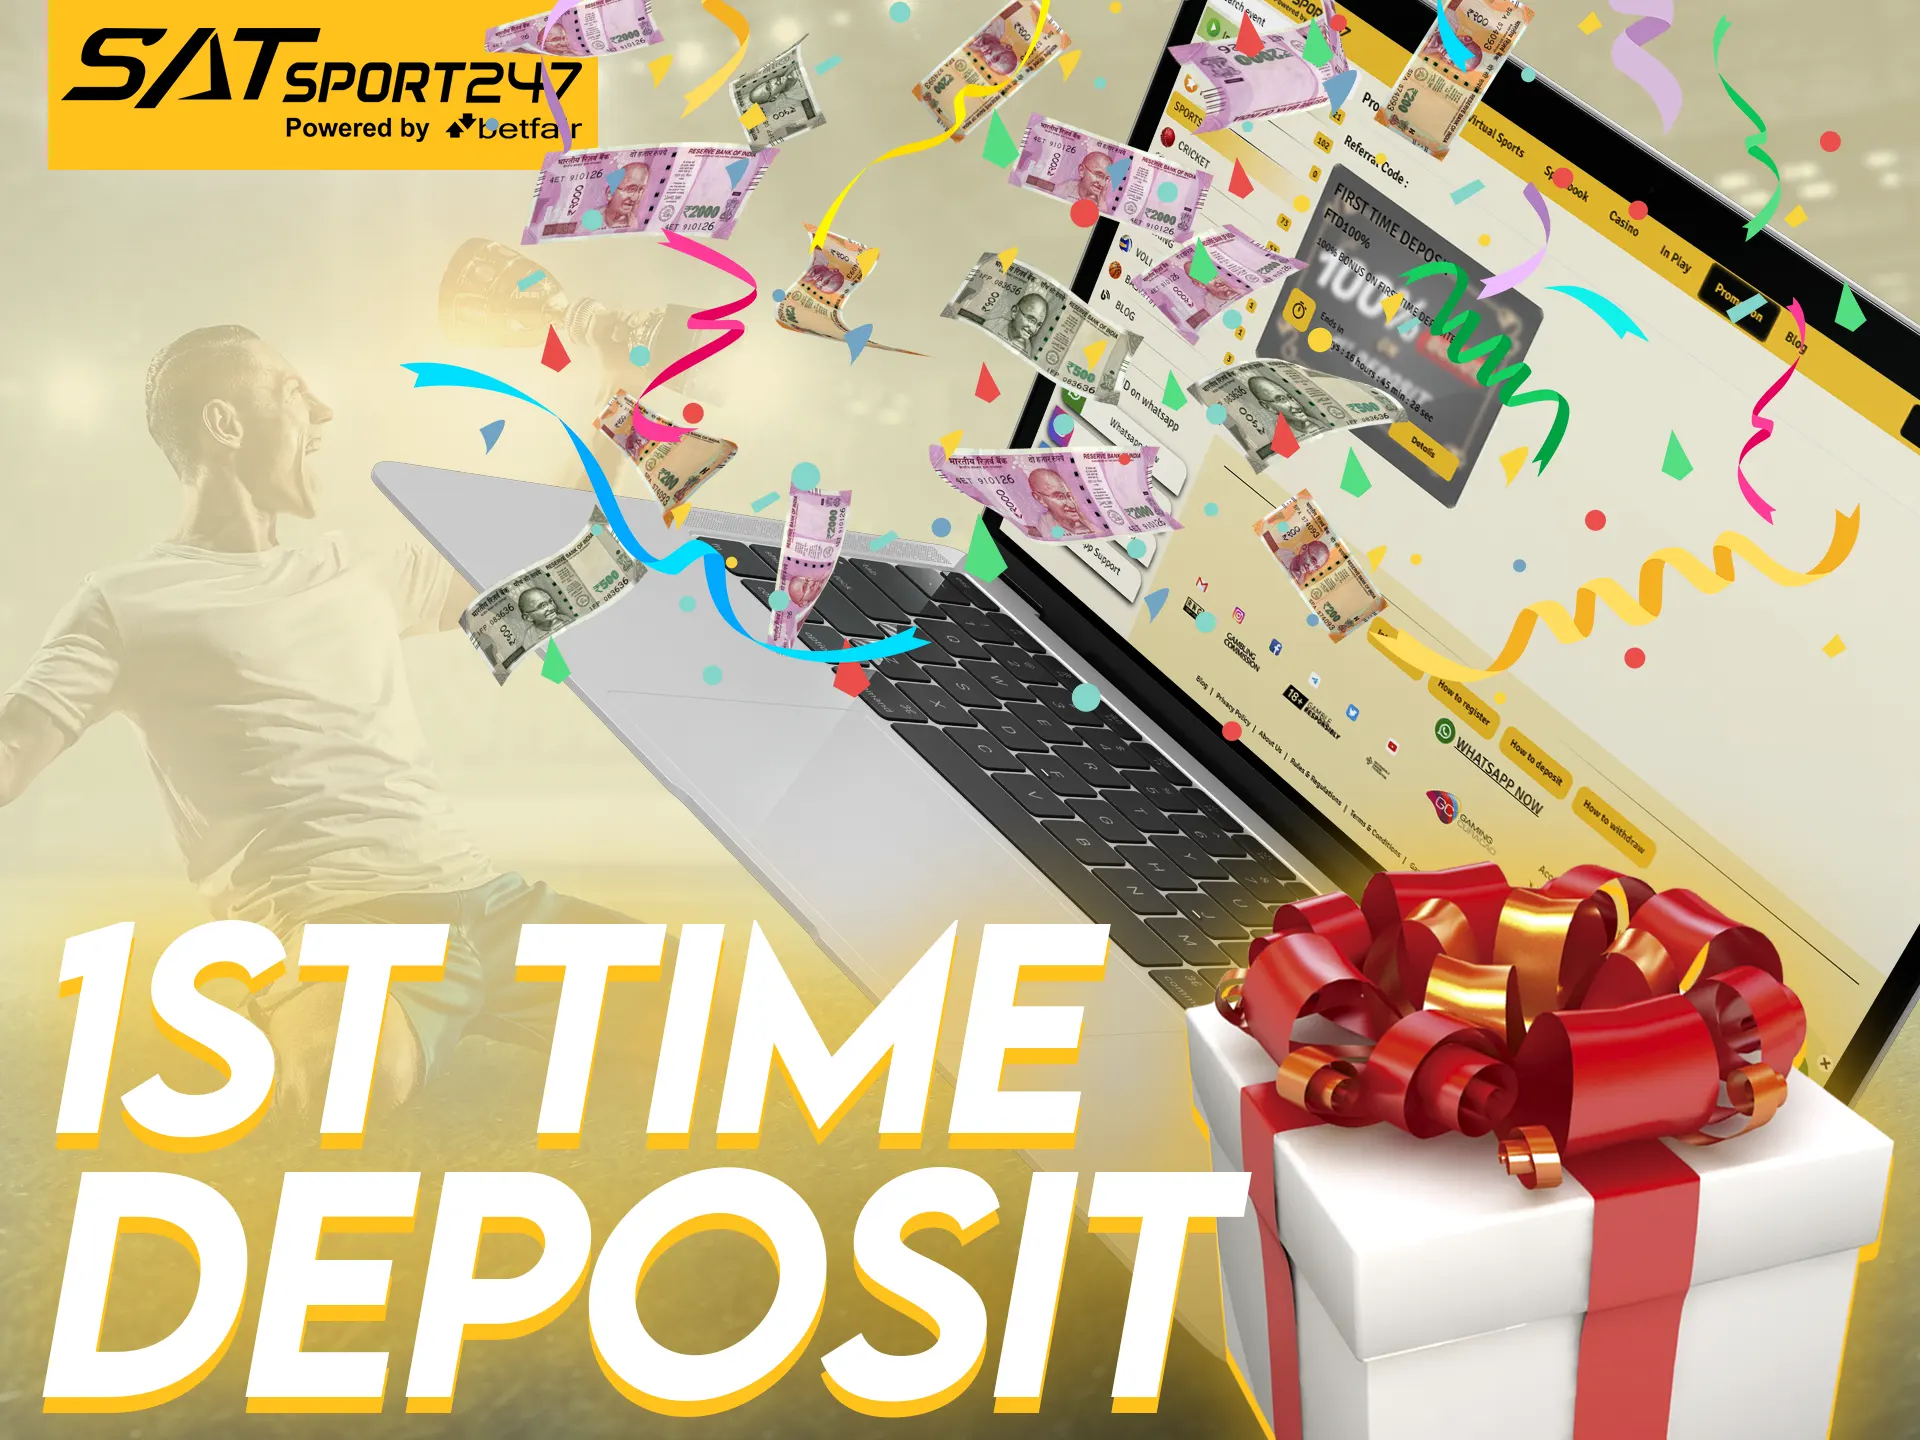 Get a bonus after your first deposit on Satsport247.